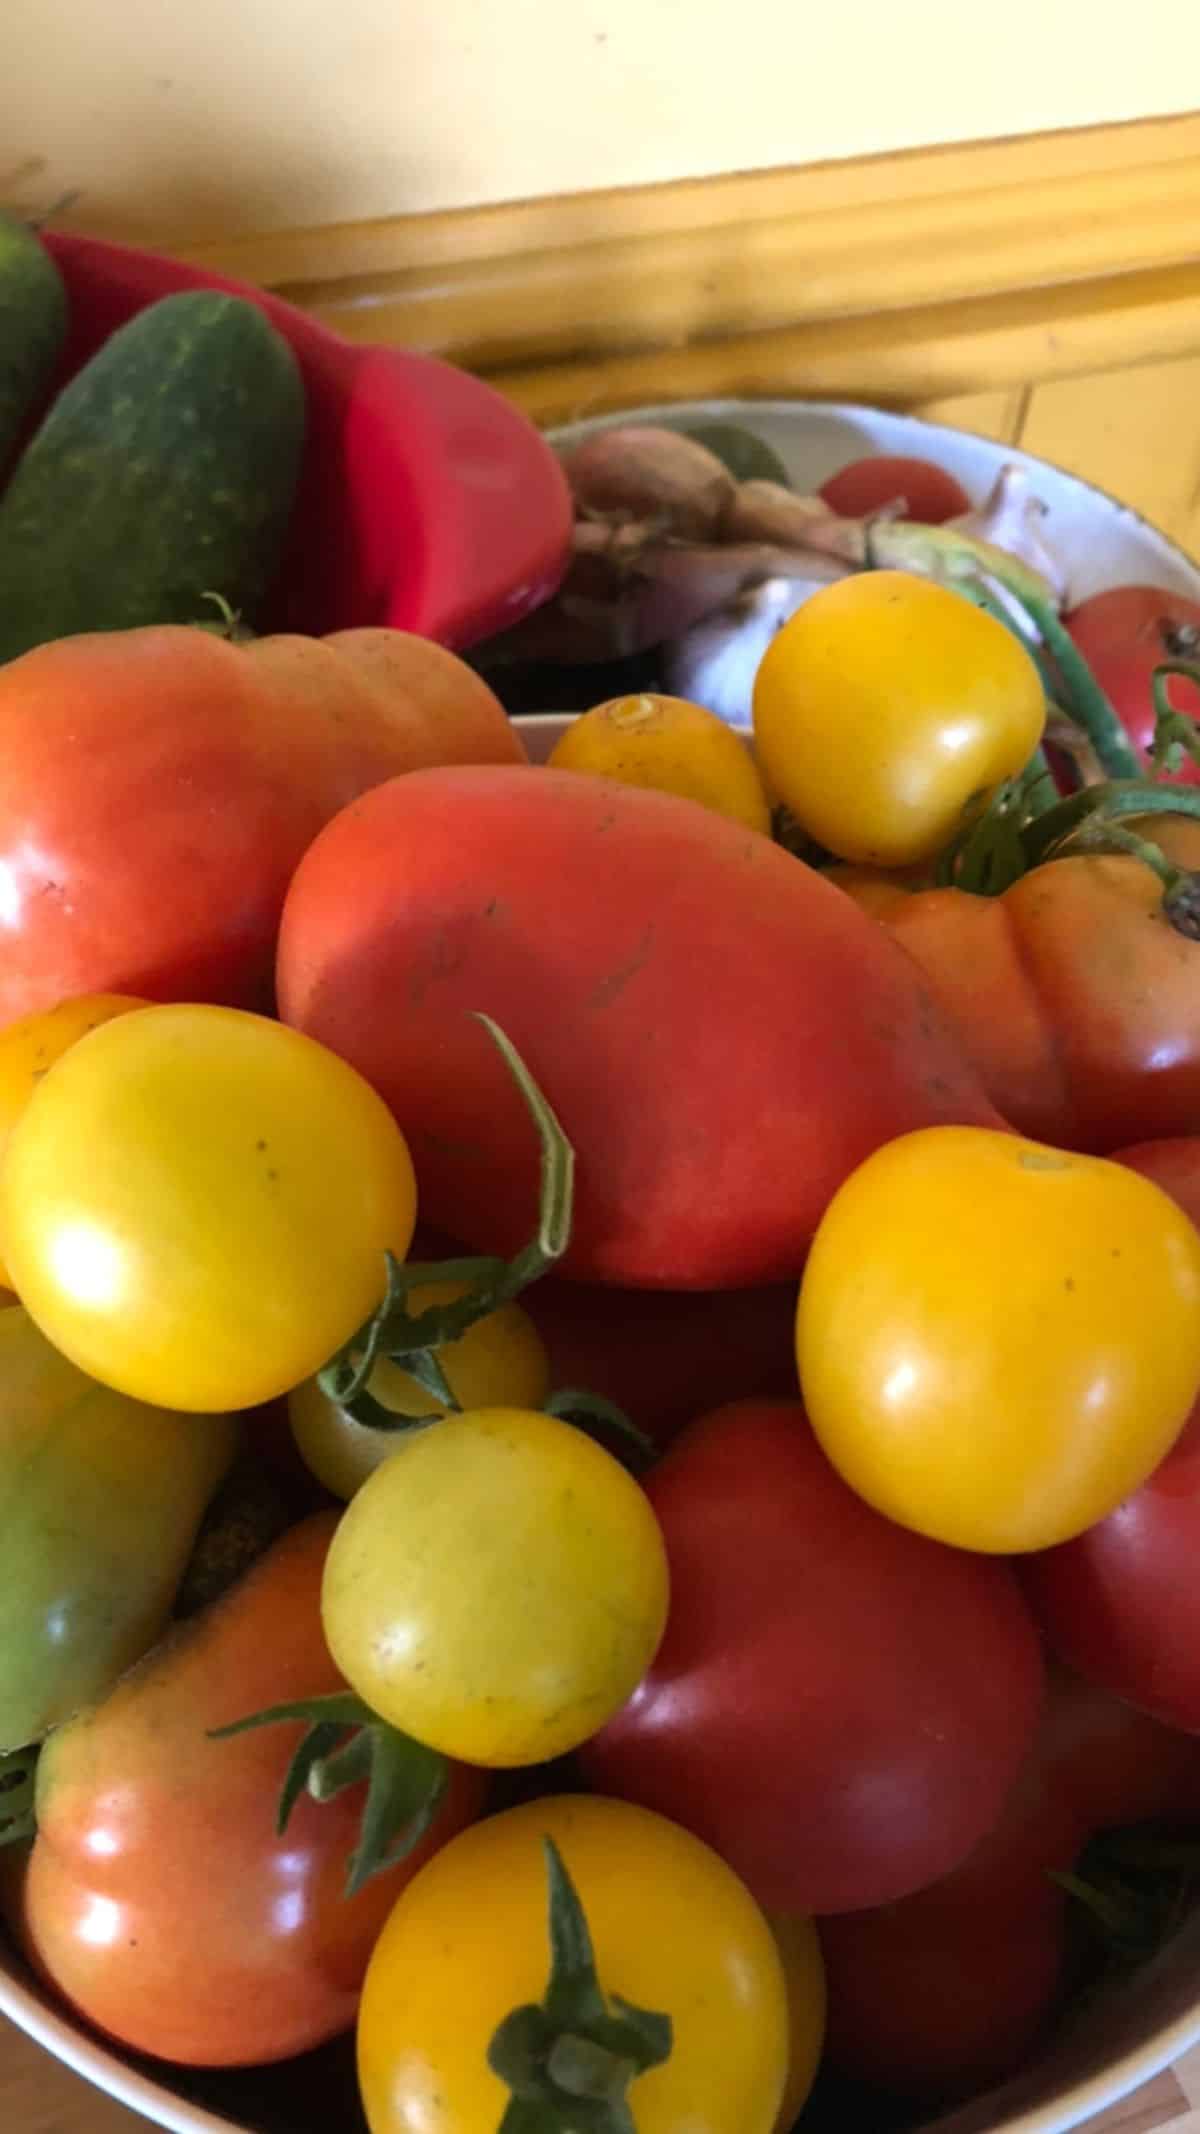 Tomatoes at room temperature